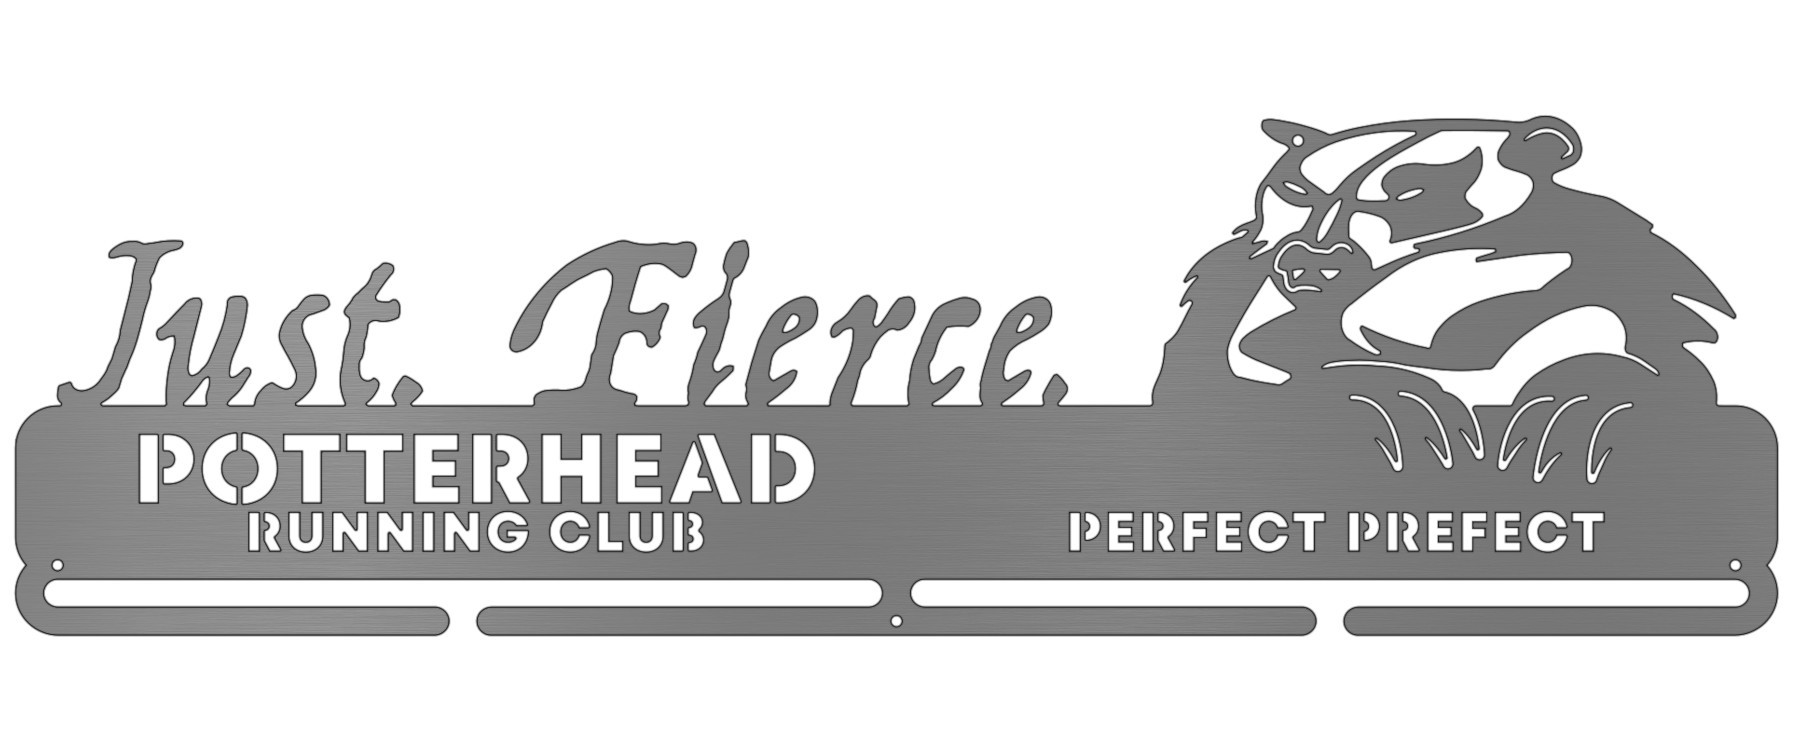 Potterhead Running Club - Just Fierce - Perfect Prefect